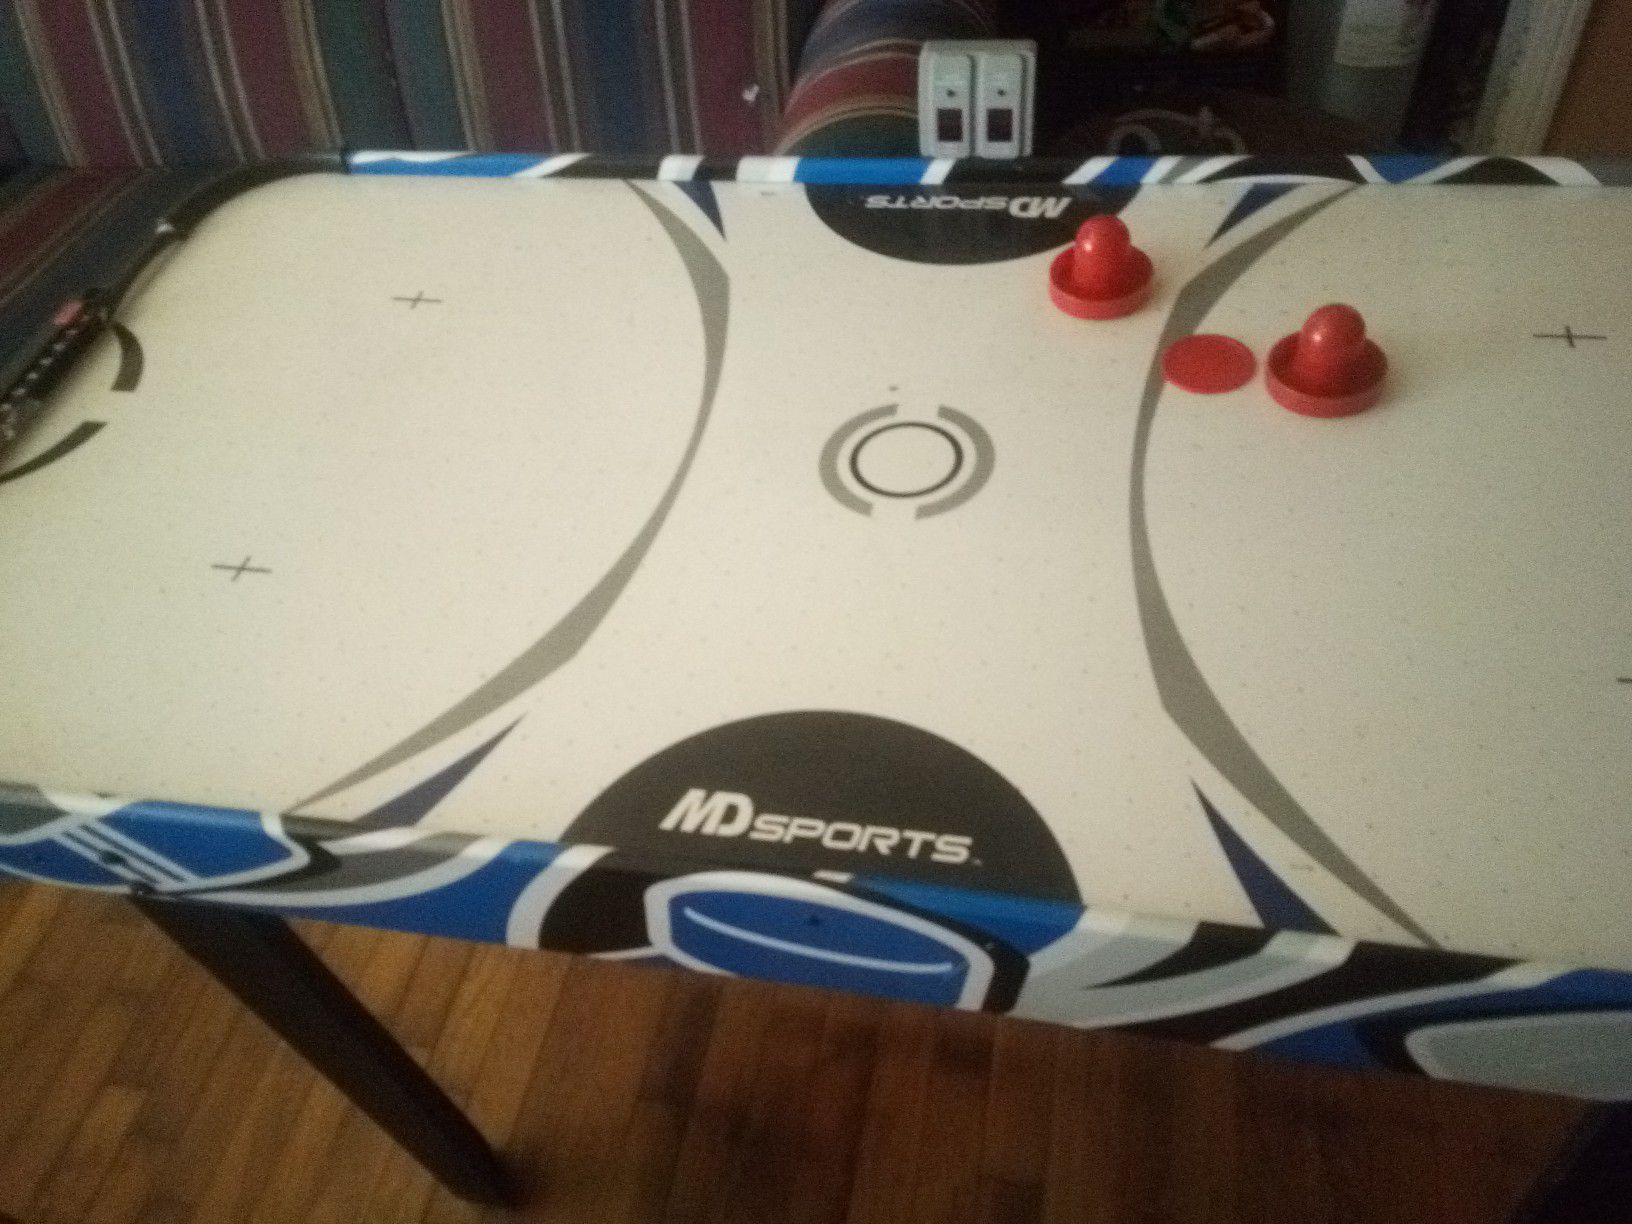 MD sports Air Hockey table